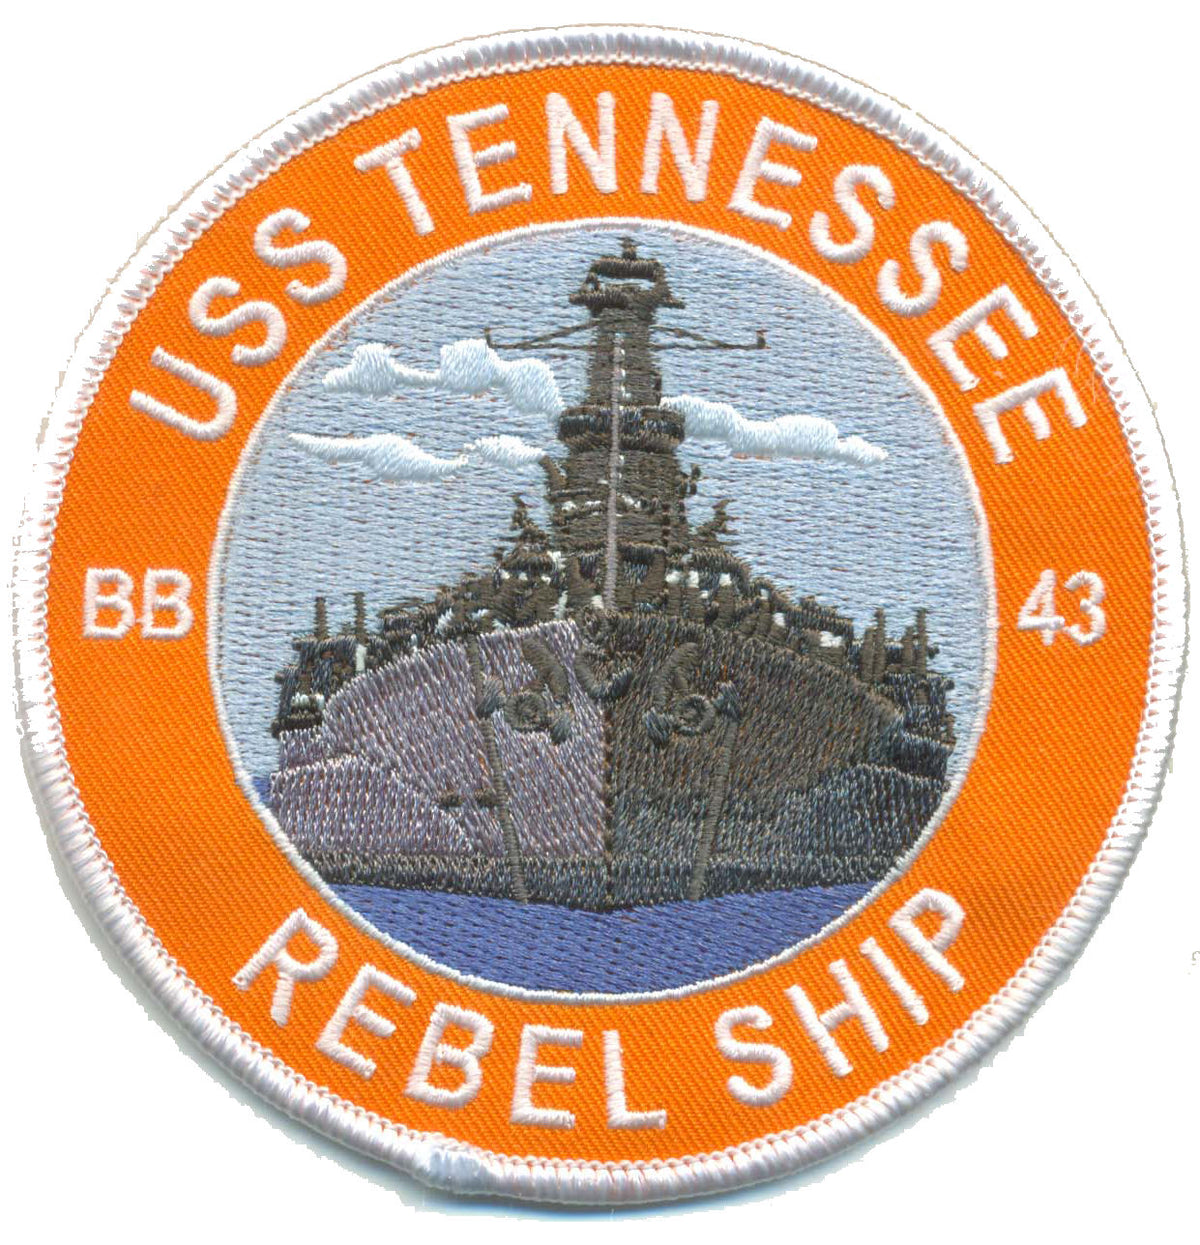 U.S.S. Tennessee BB-43 USMC Patch